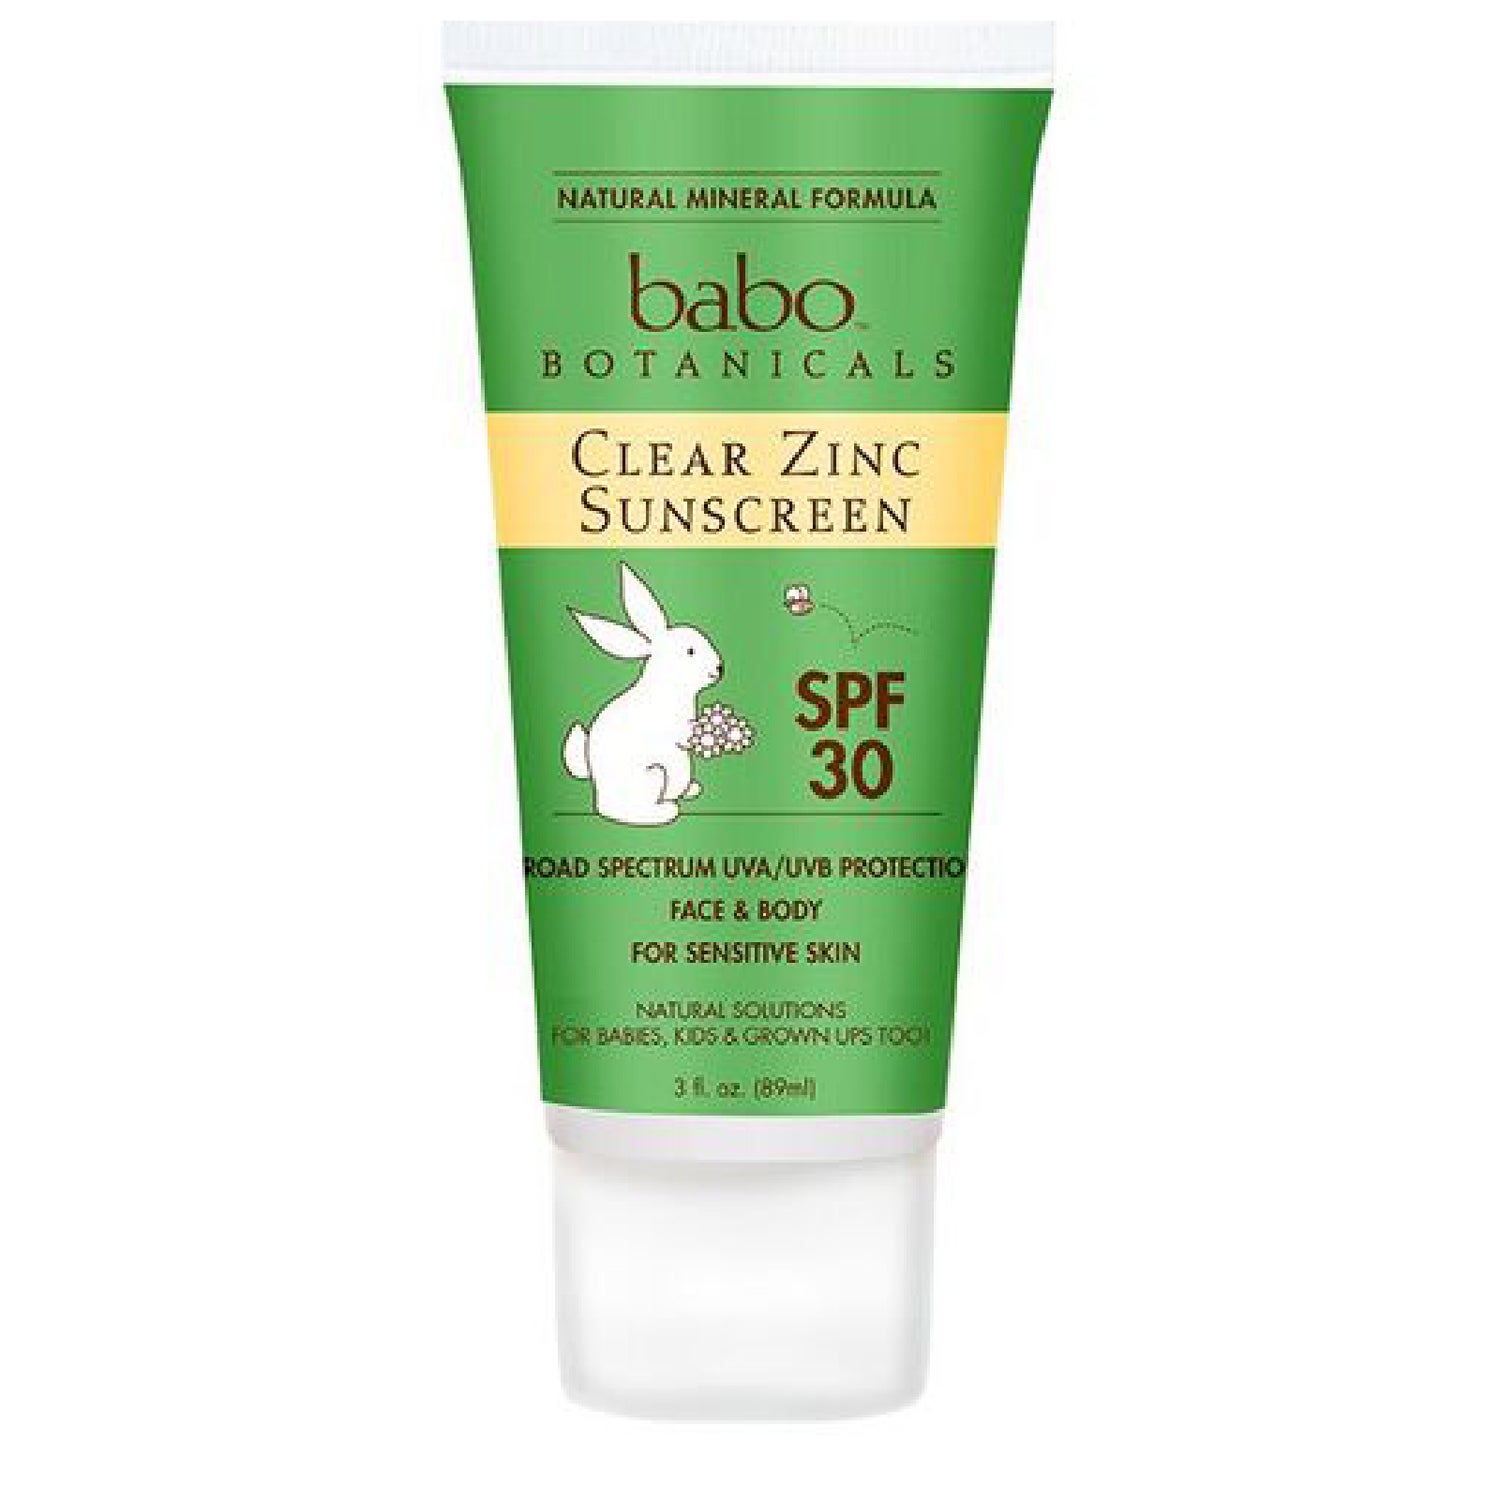 Babo Botanicals Clear Zinc Sunscreen SPF 30